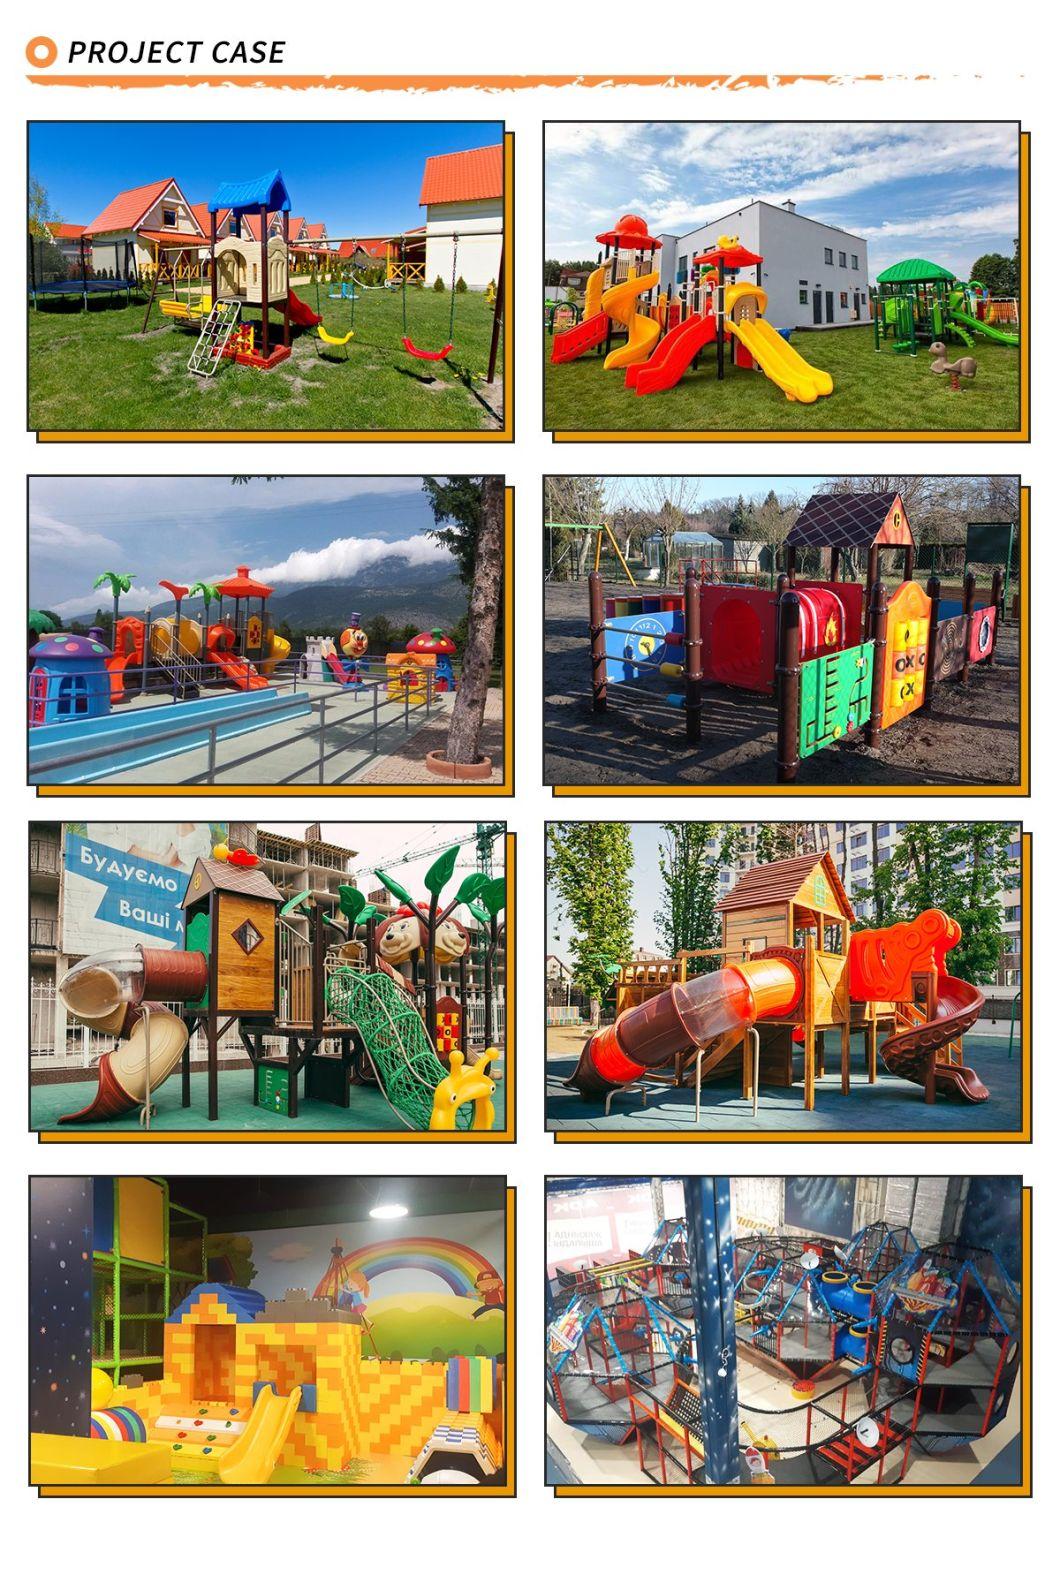 Animal World Series Large Outdoor Playground Kids Slide Equipment